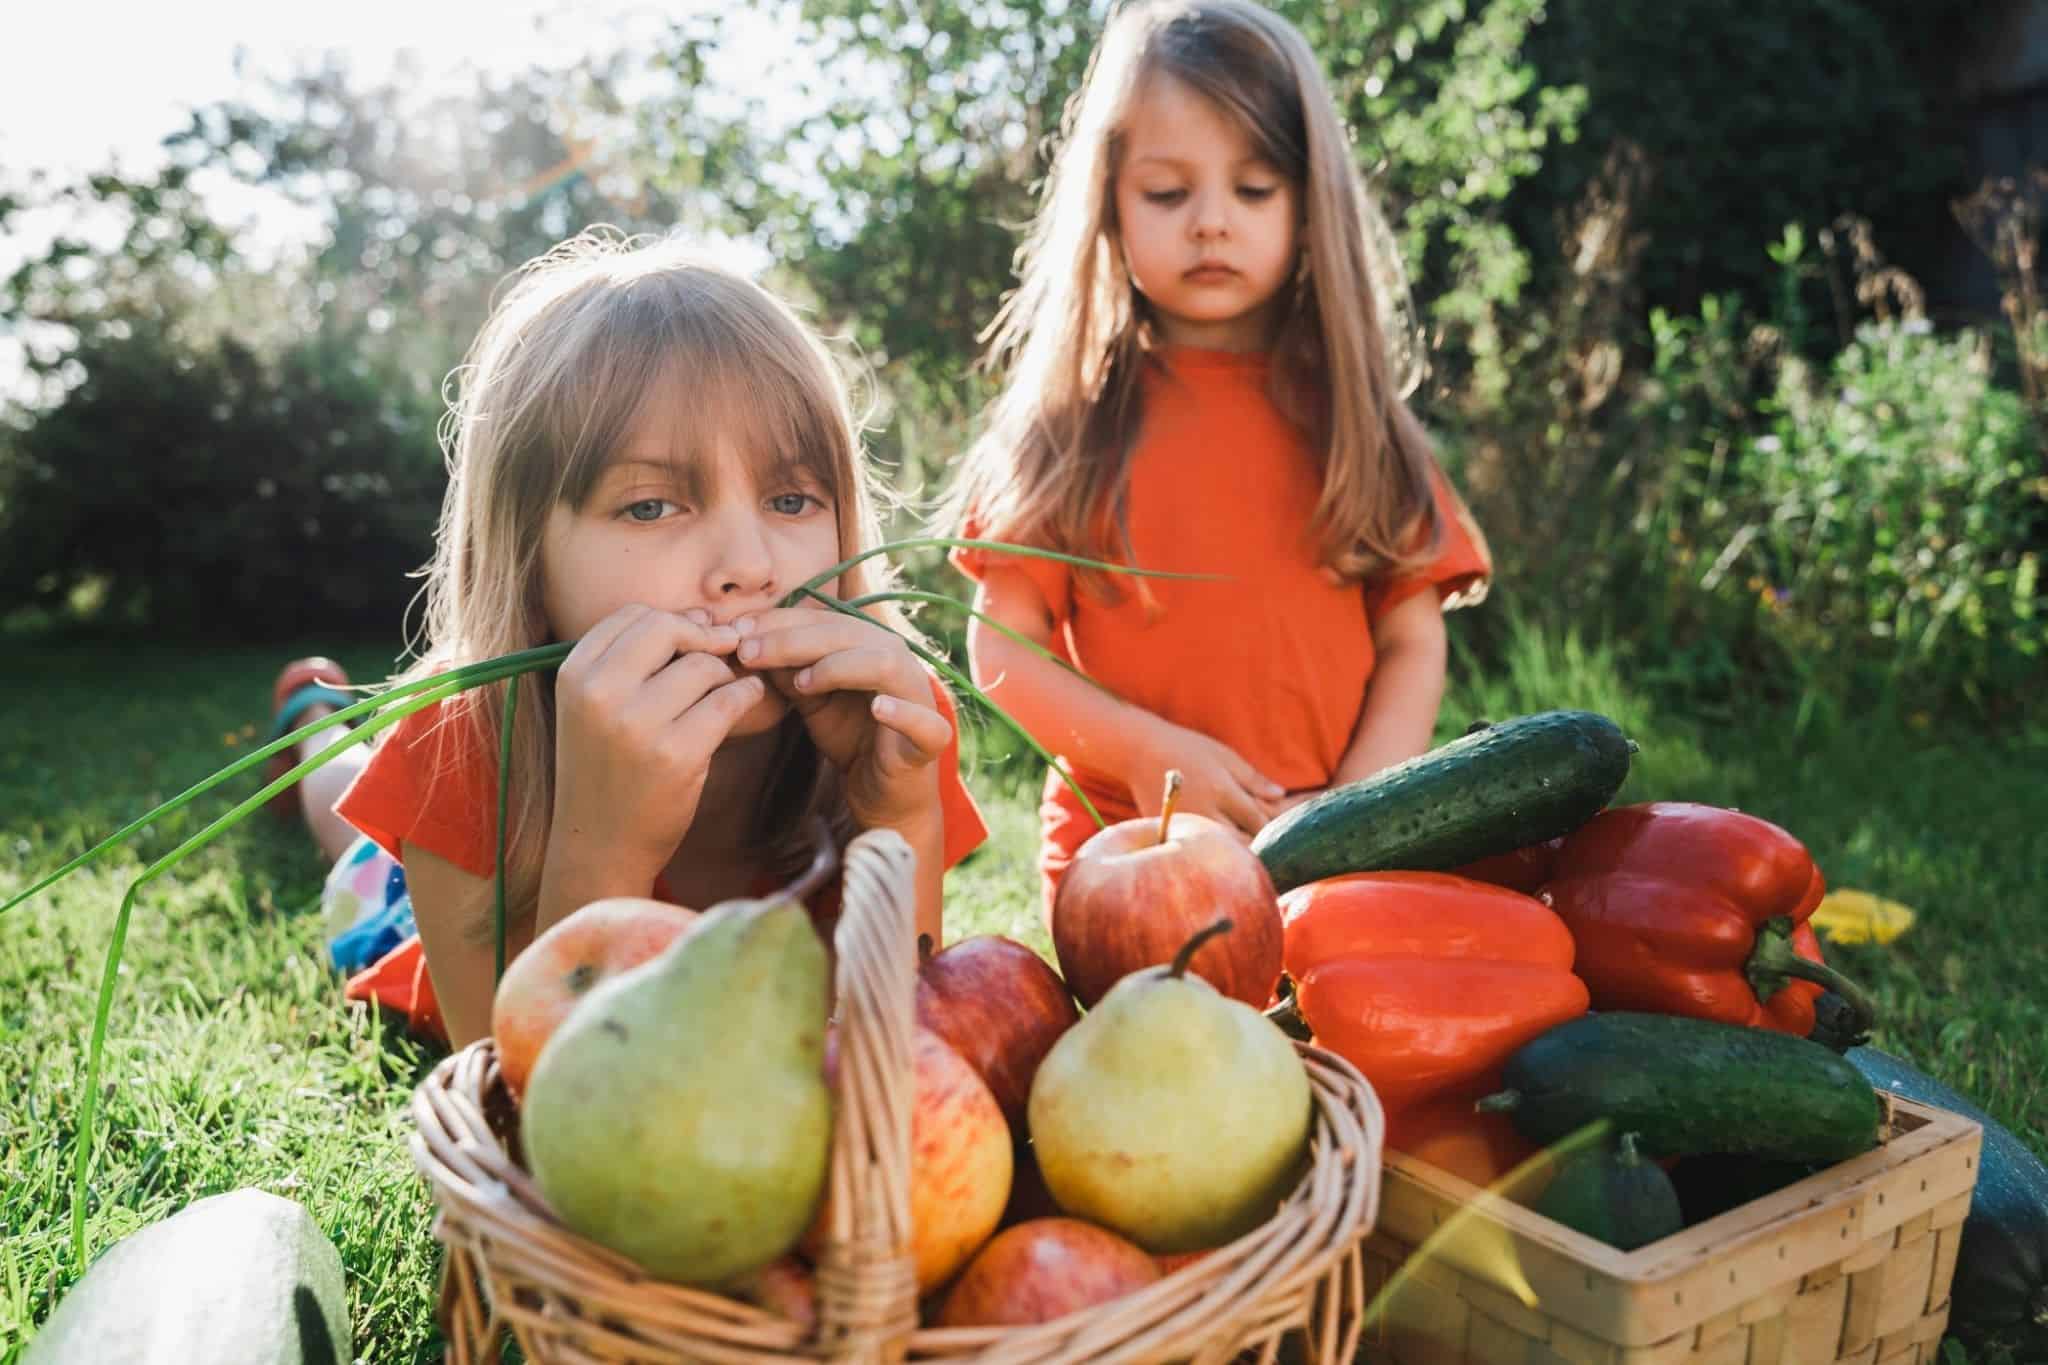 Children in front of fruit and vegetable baskets evoking food waste